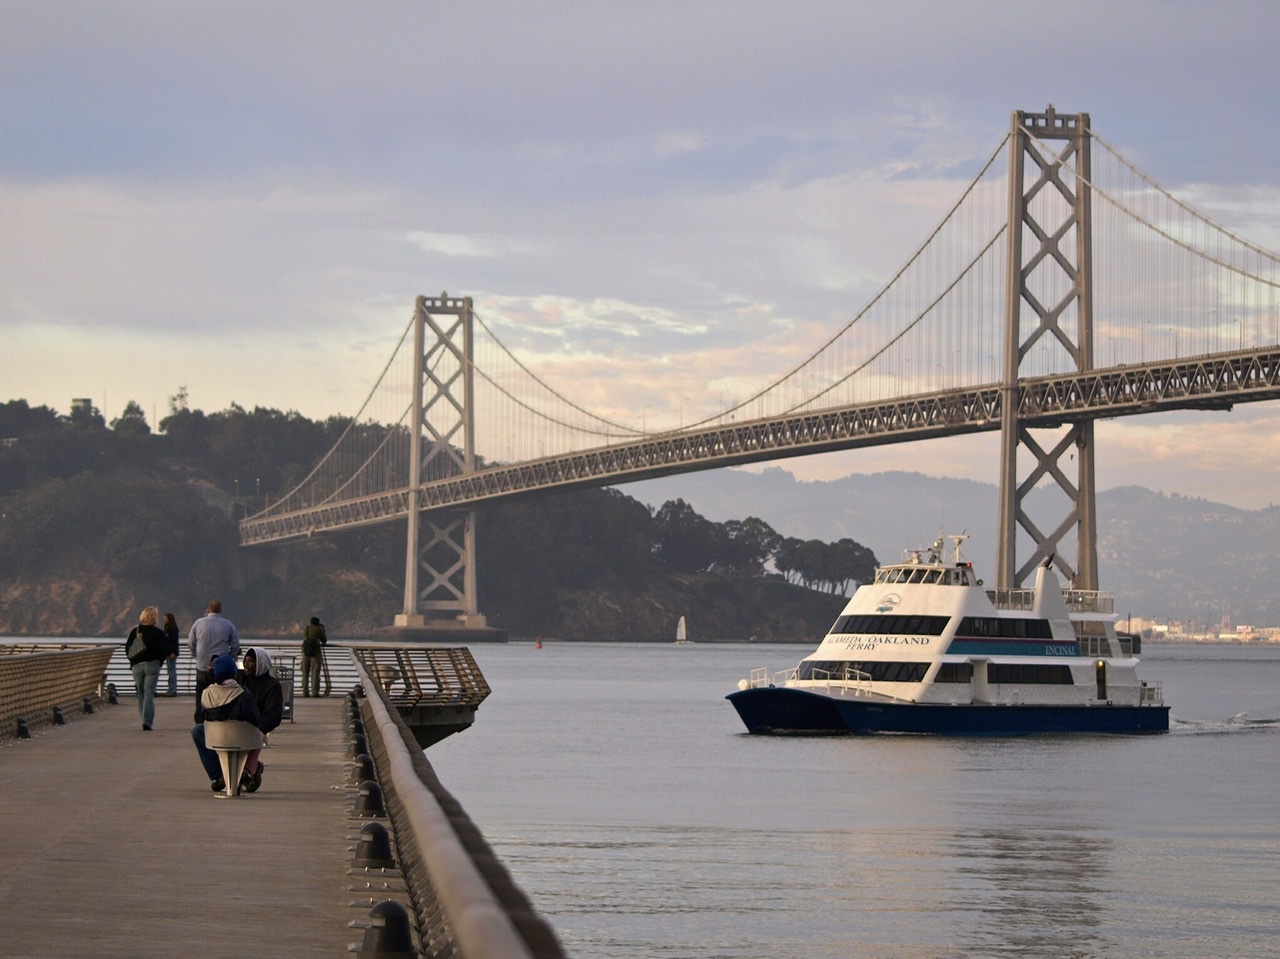 Oakland Ferry and San Francisco Bay Bridge